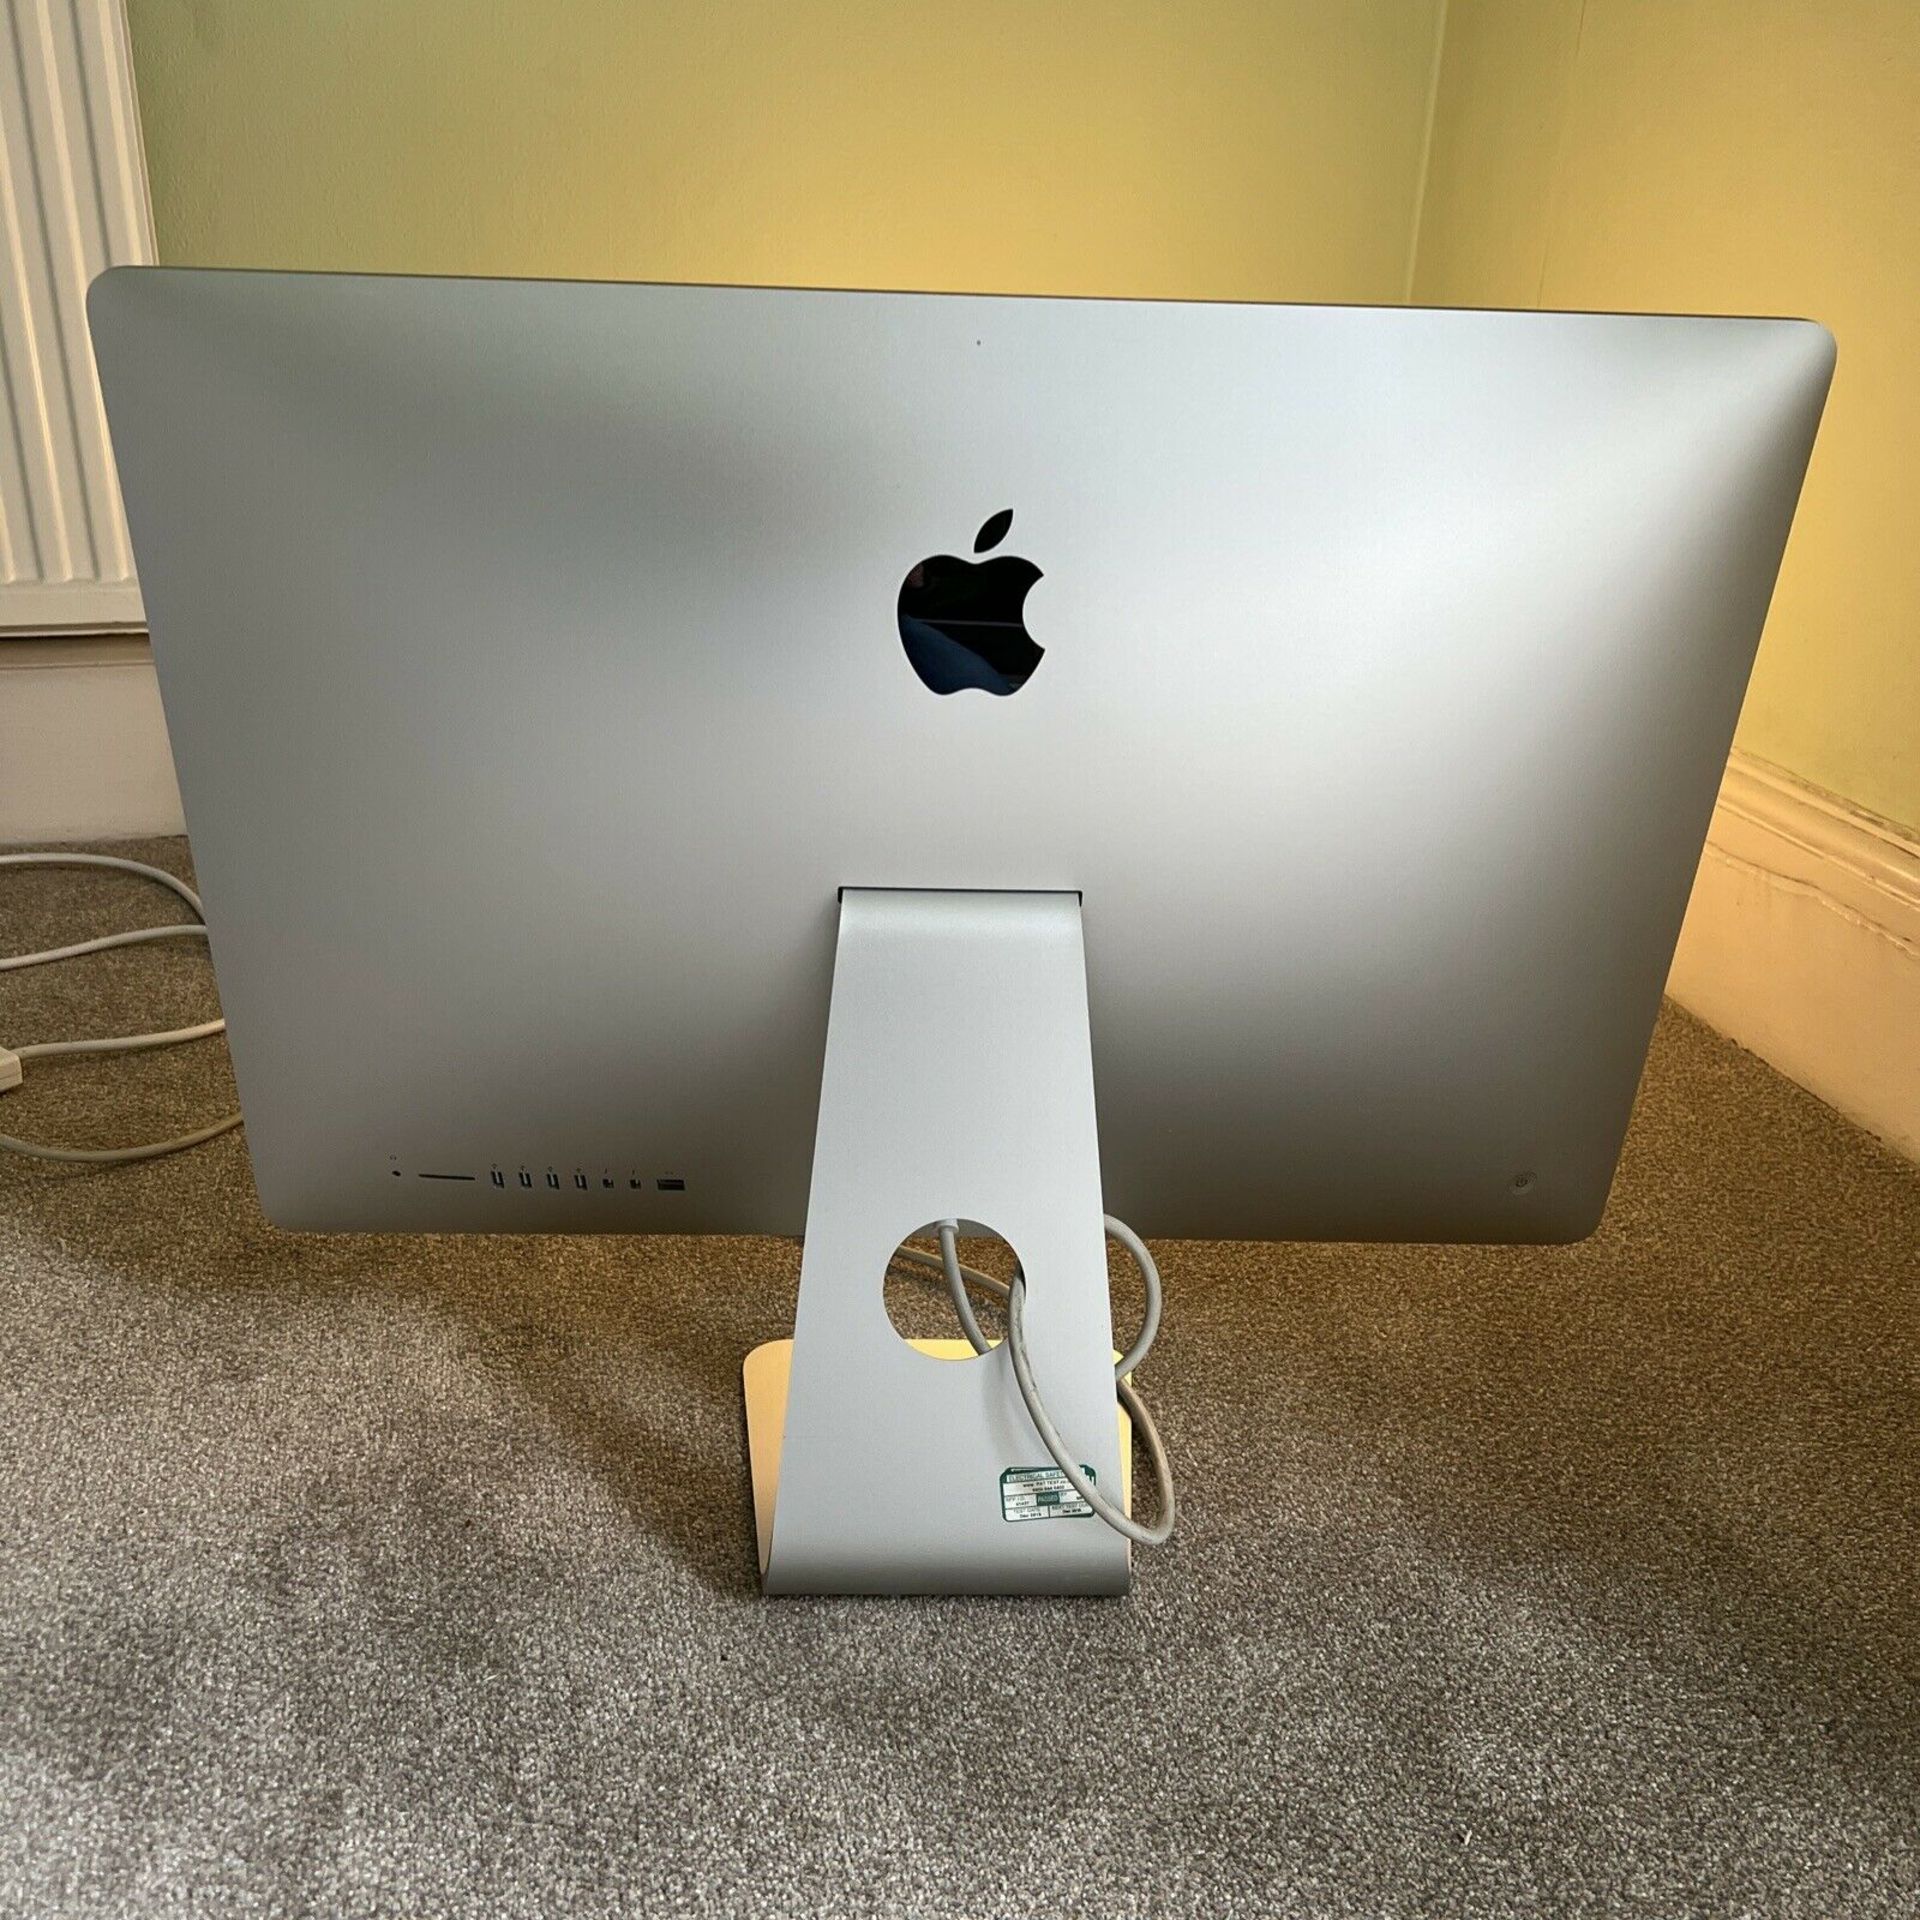 Apple iMac 21.5"" A1418 OS X Catalina Intel Core I5 8Gb DDR3 1TB HD GeForce GT 640M office - Image 4 of 5